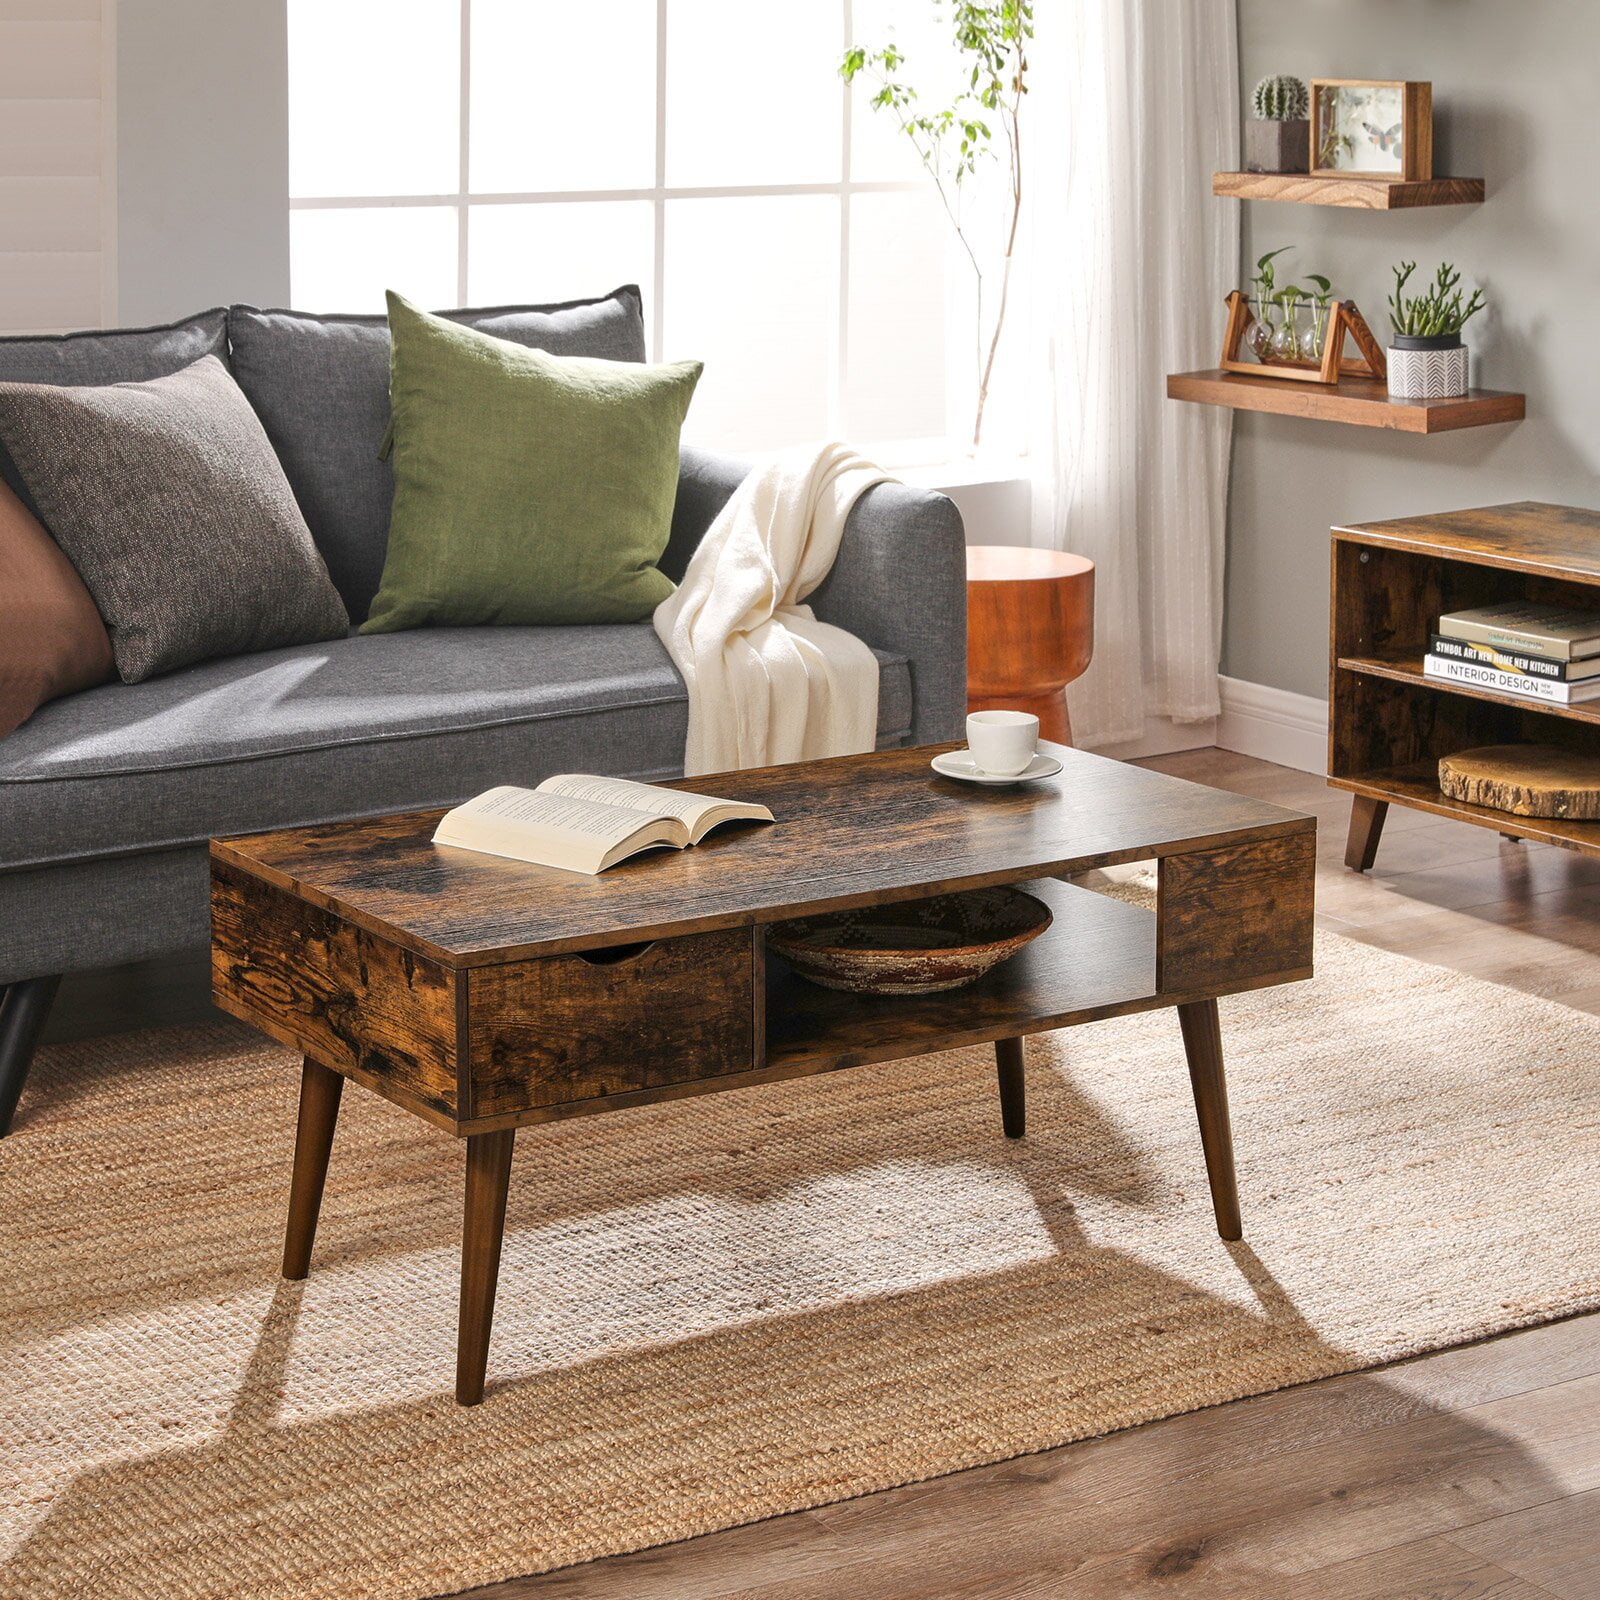 Details about   Living Room End Table Bottom Storage Space Walnut Oak Finish Wooden Furniture 